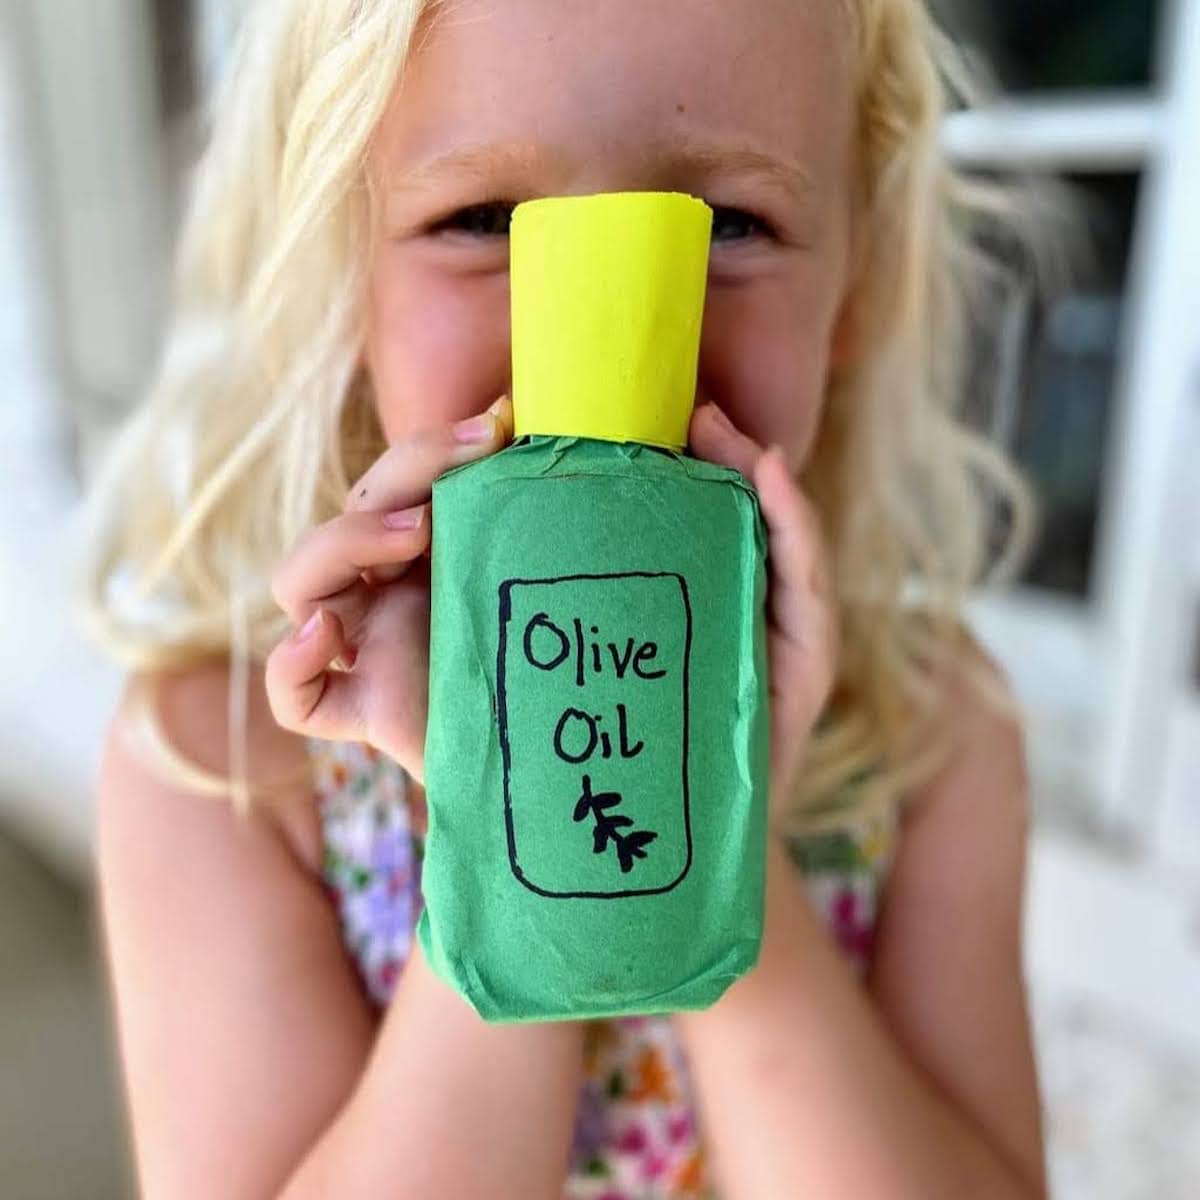 Child holding completed olive oil bottle craft with "Olive Oil" logo